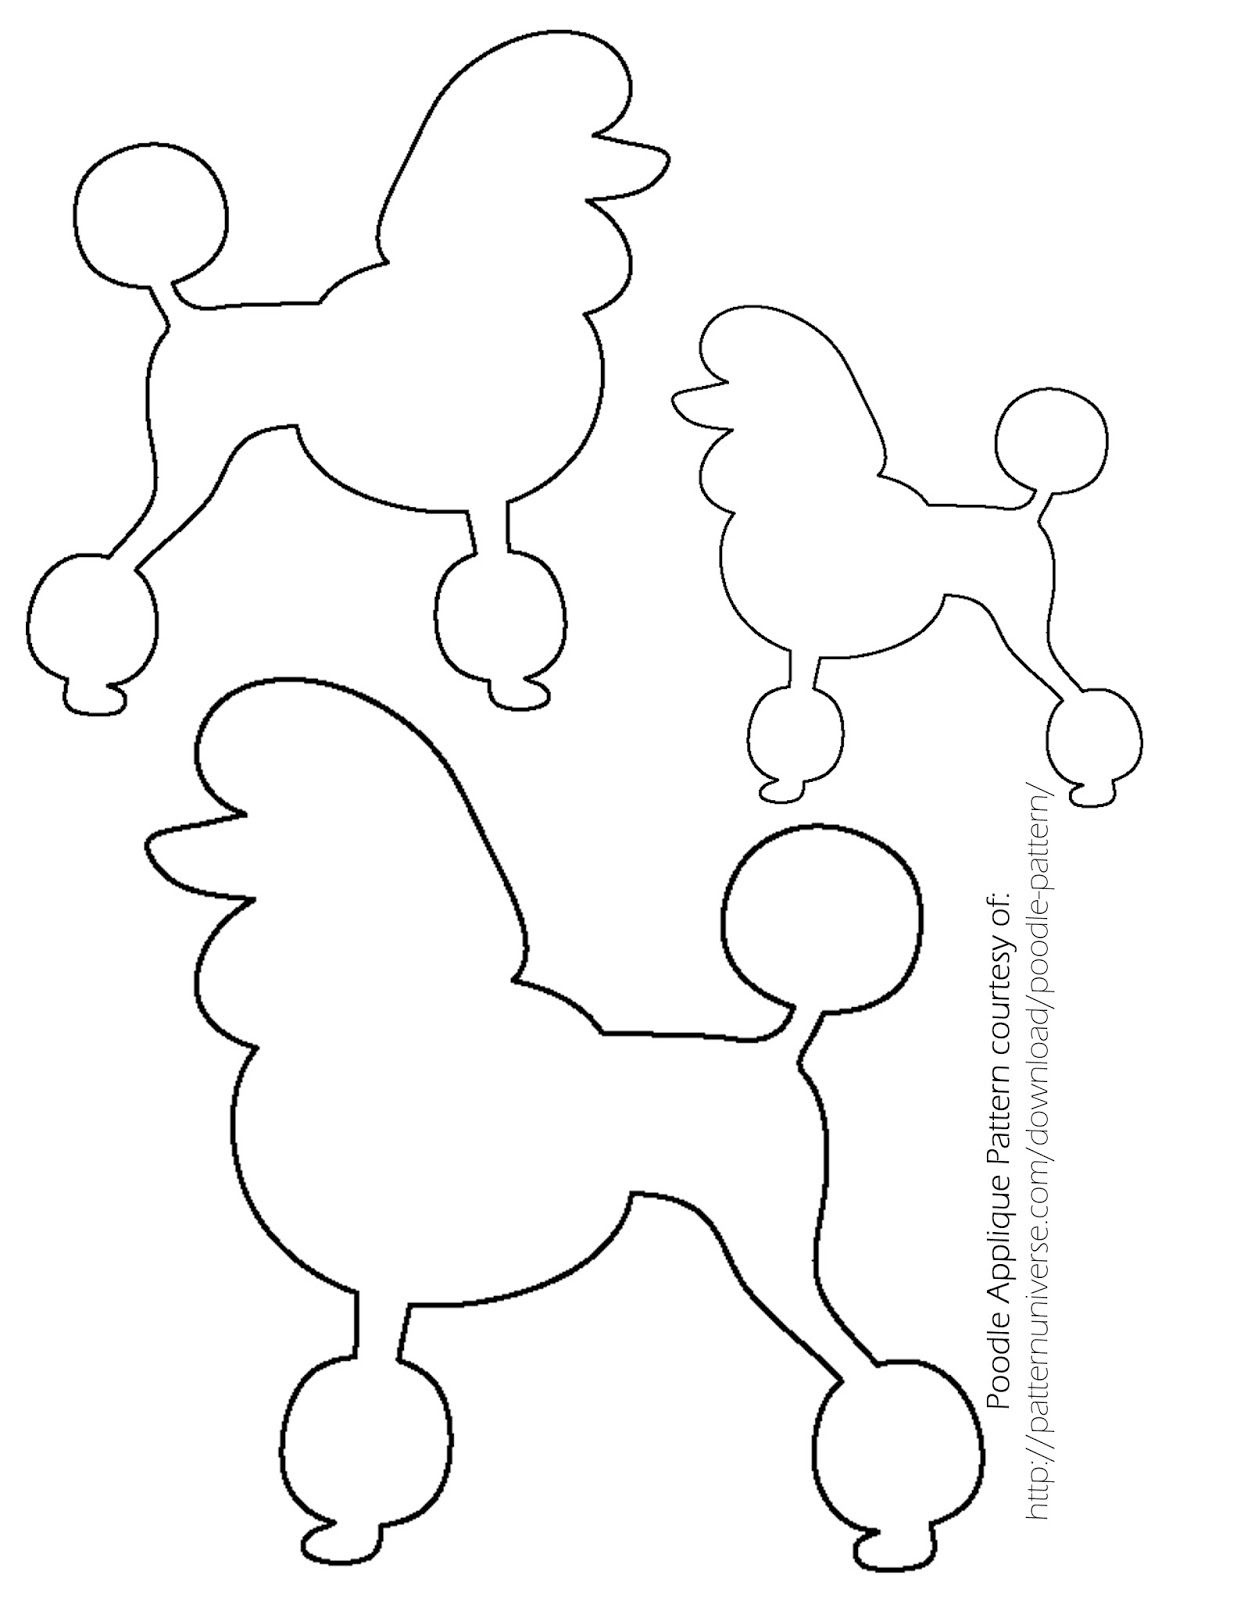 Image Result For Poodle Drawing | Poodles | Sock Hop Costumes, Sock - Free Printable Poodle Template